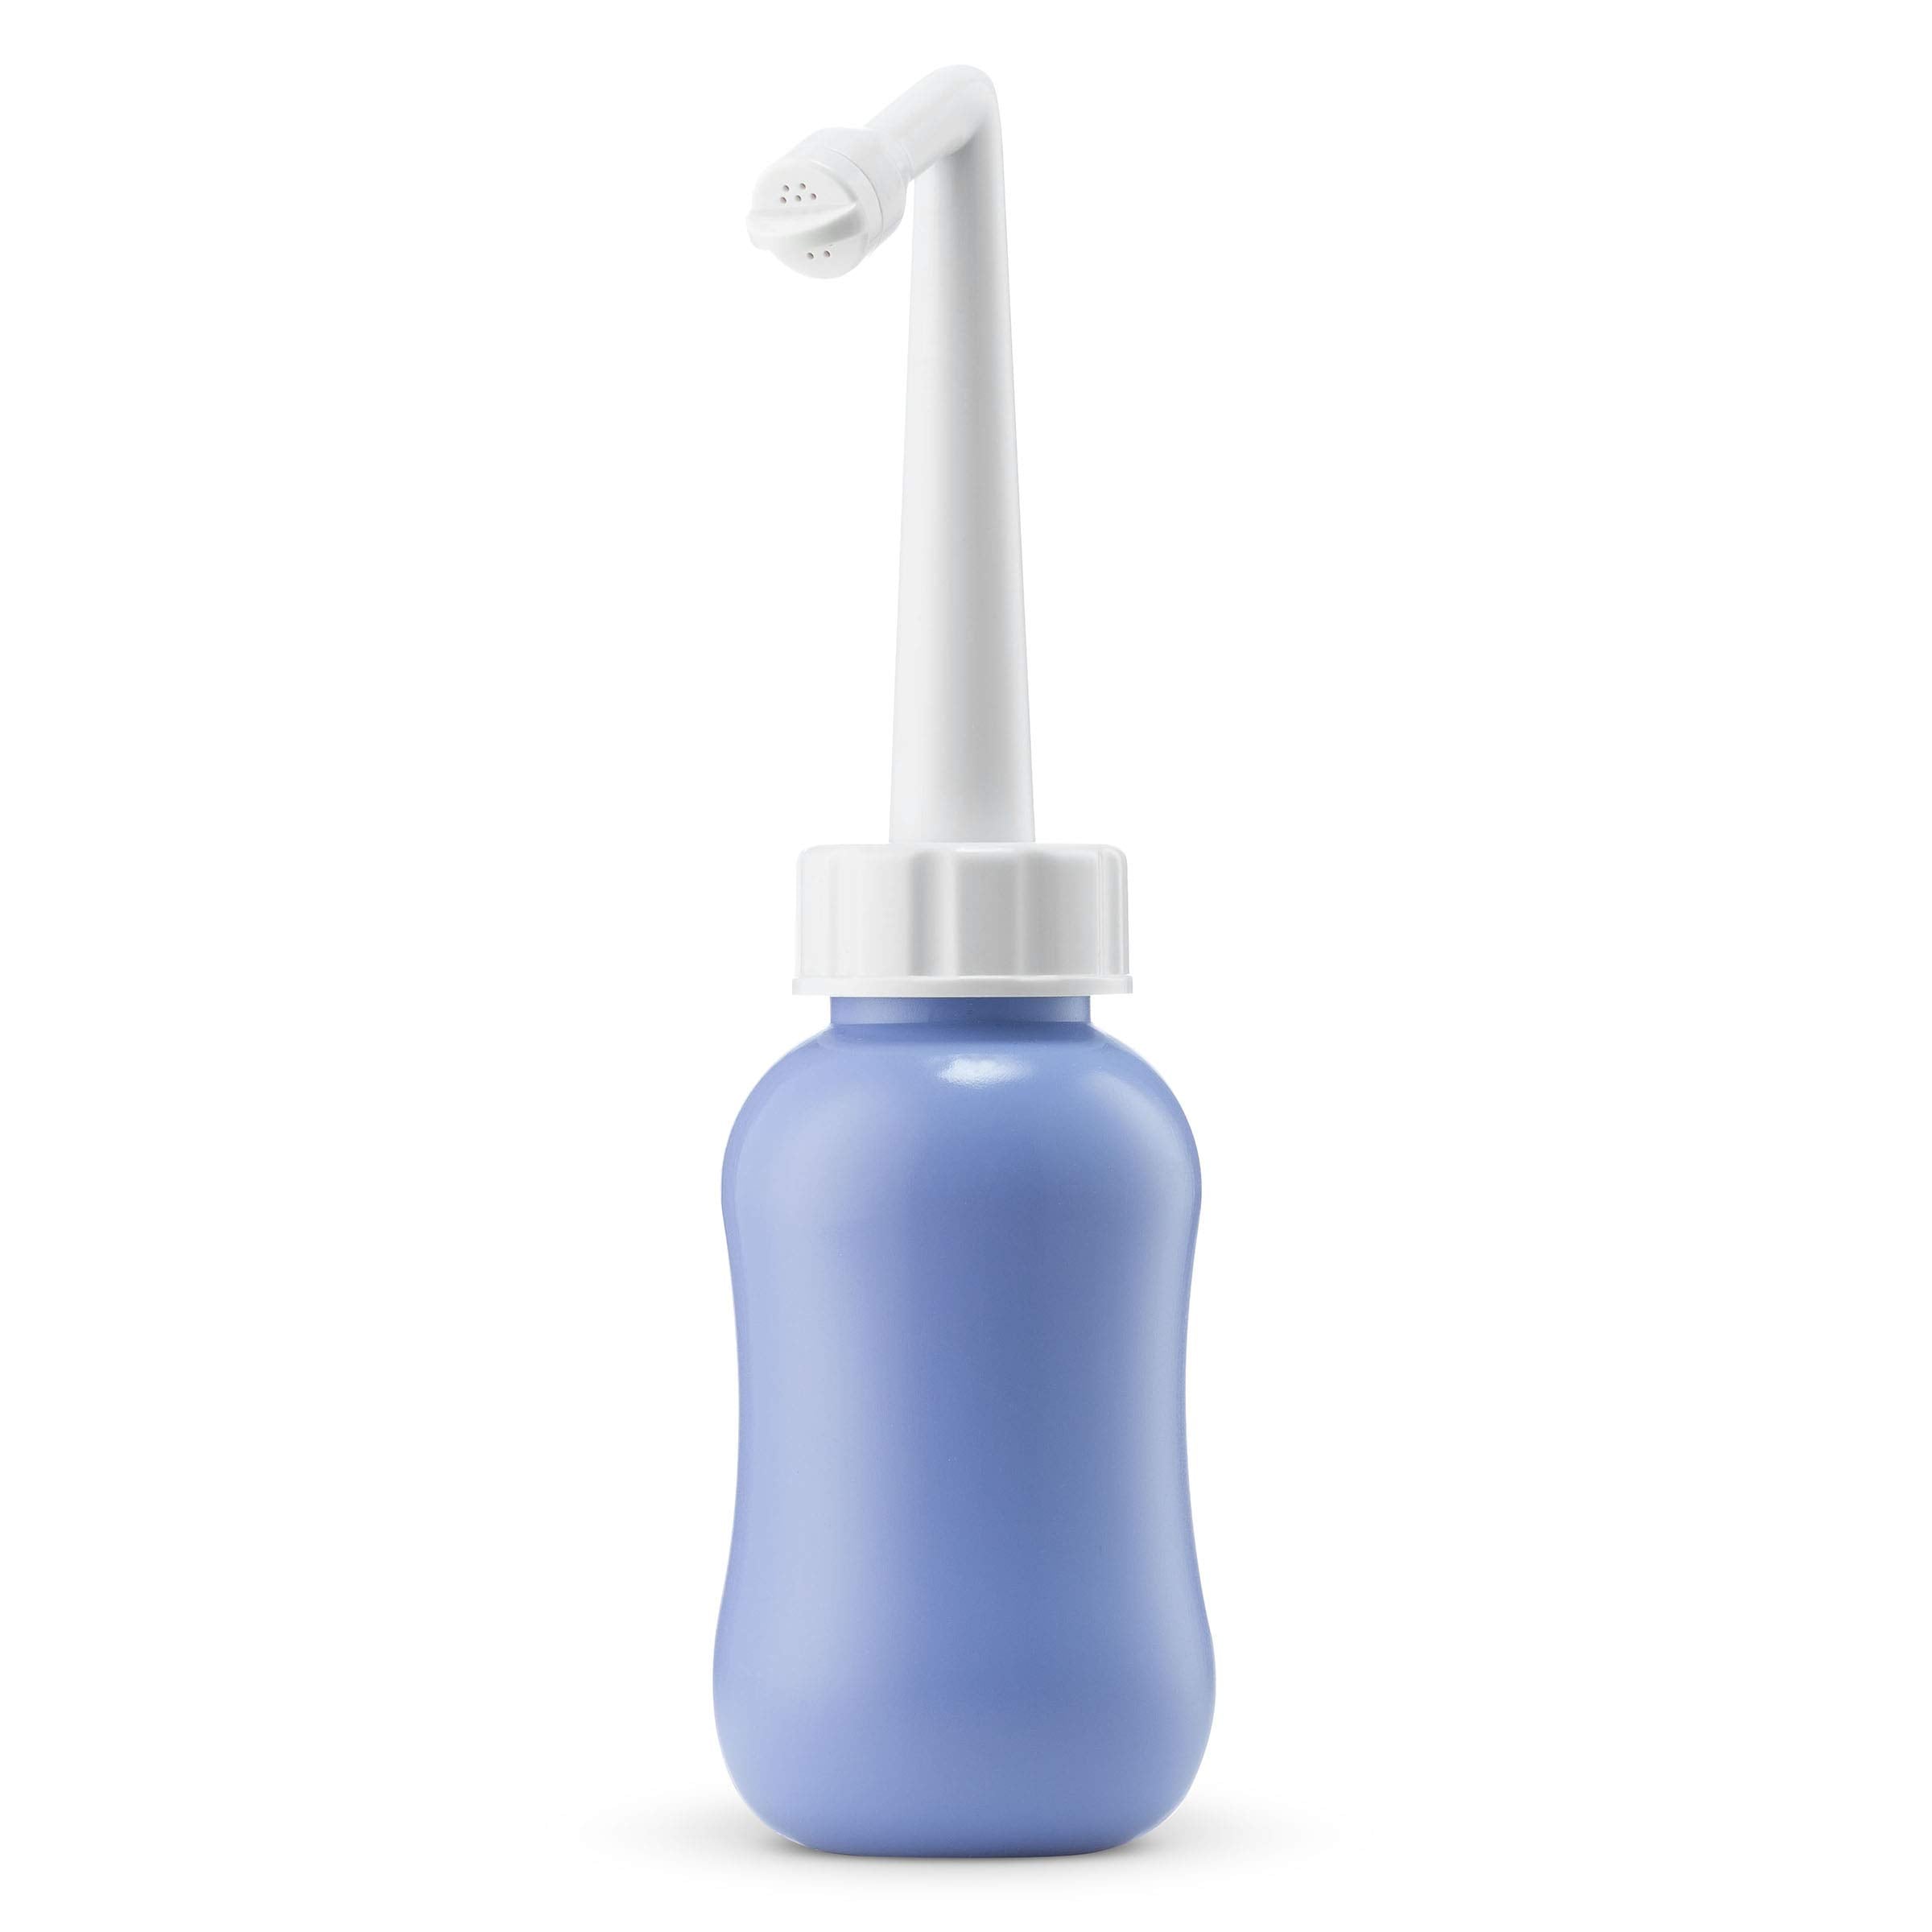 16 oz Travel Bidet Bottle- Portable Bidet Sprayer Mini Handheld